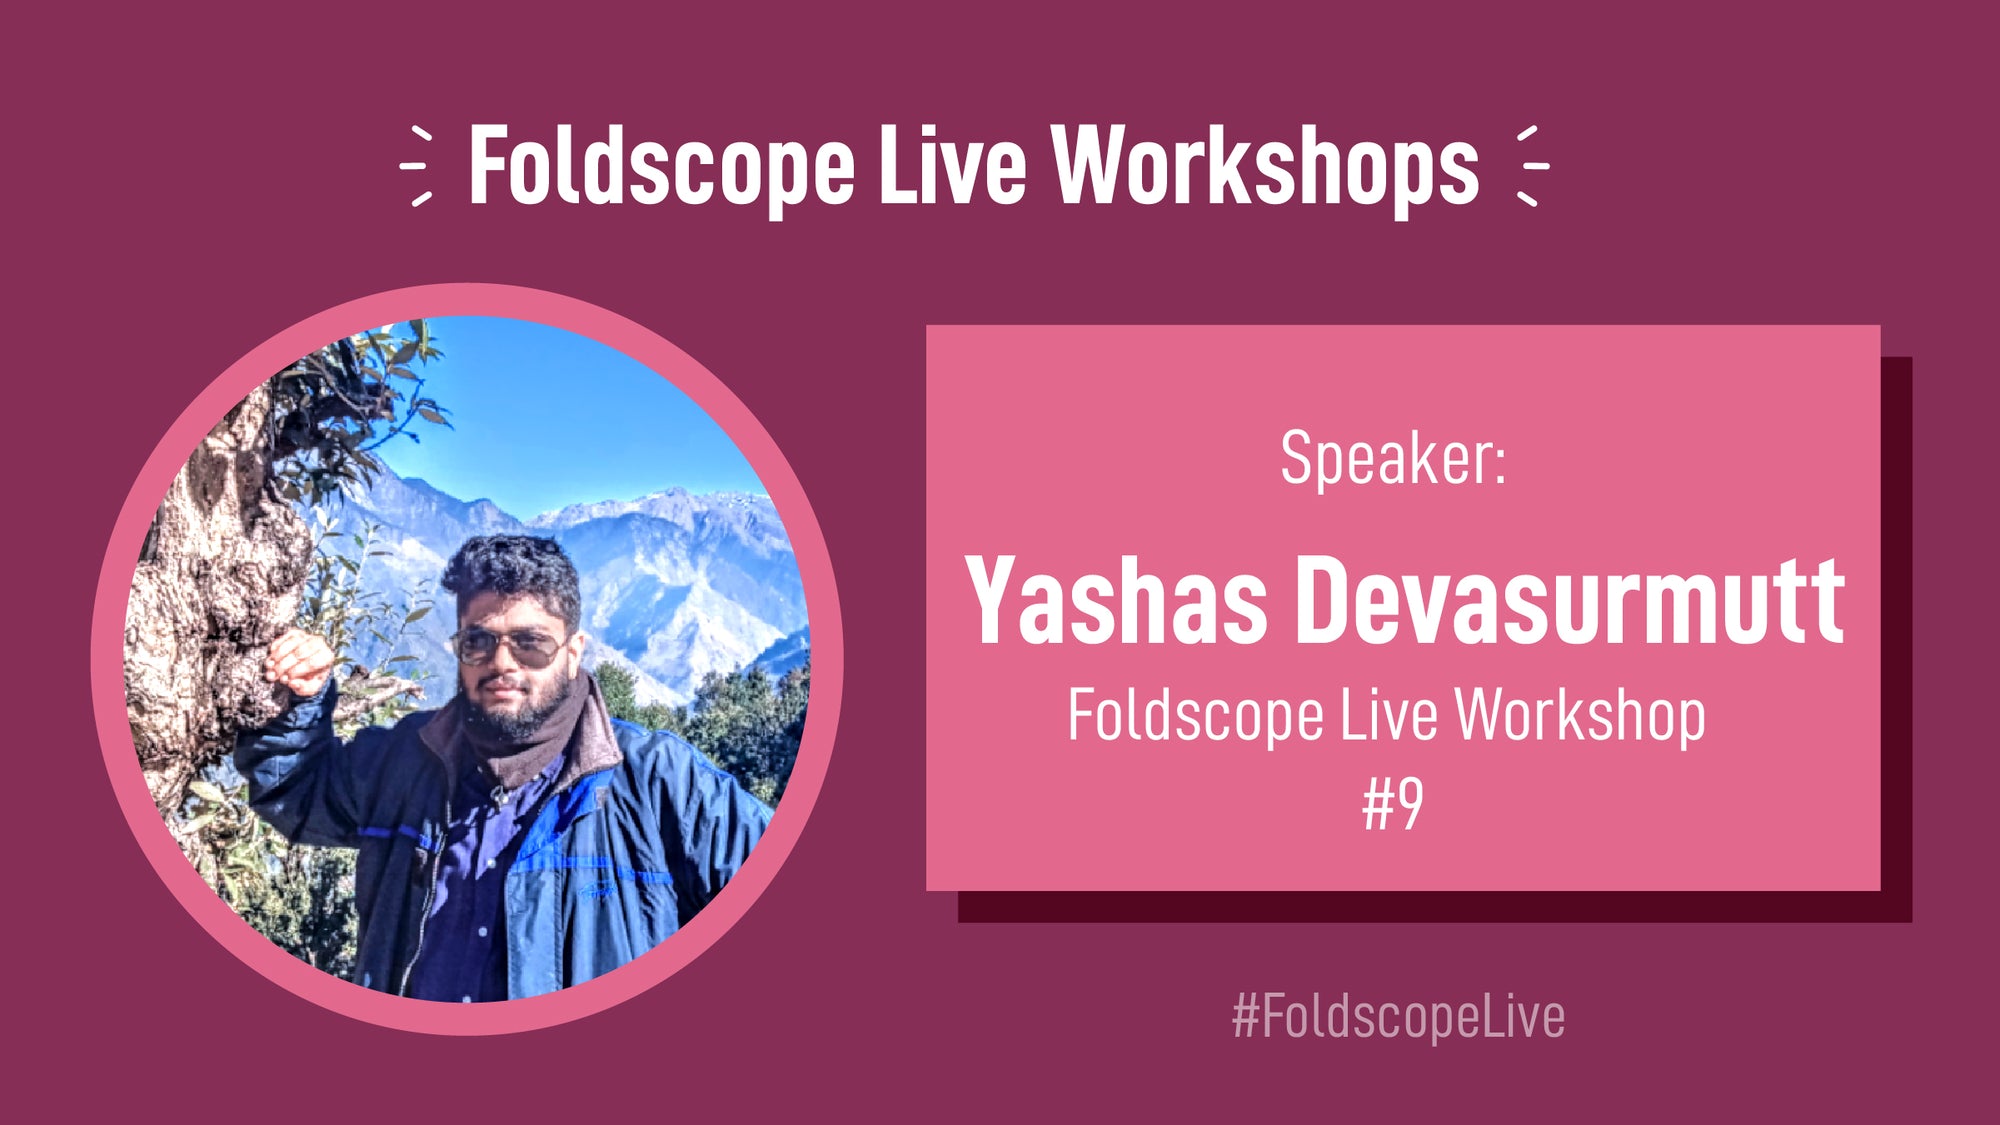 Foldscope Live Workshop #9 - Yashas Devasurmutt